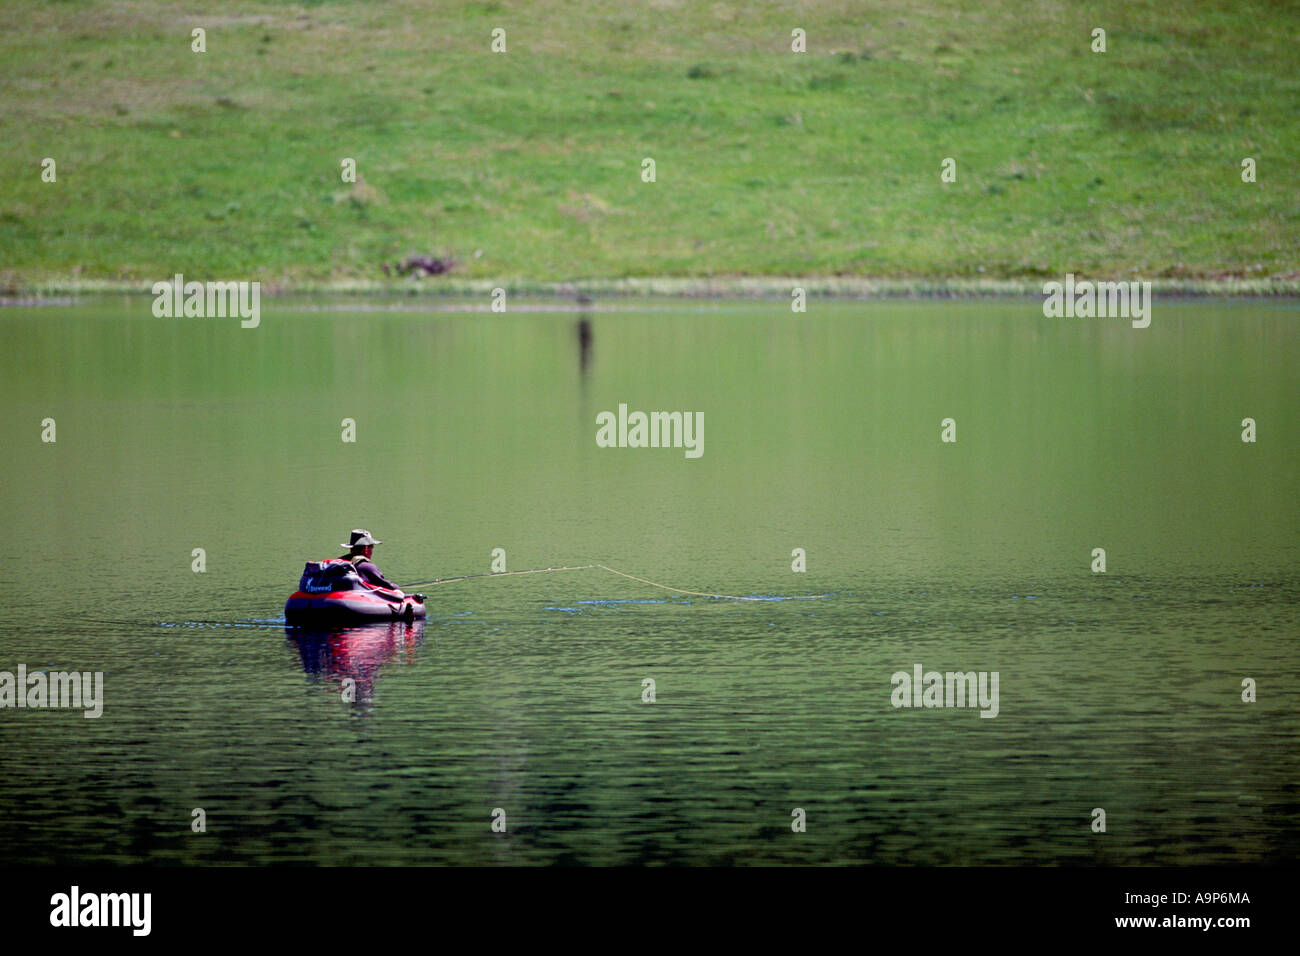 https://c8.alamy.com/comp/A9P6MA/fisherman-sport-fishing-in-belly-boat-in-nicola-lake-near-merritt-A9P6MA.jpg